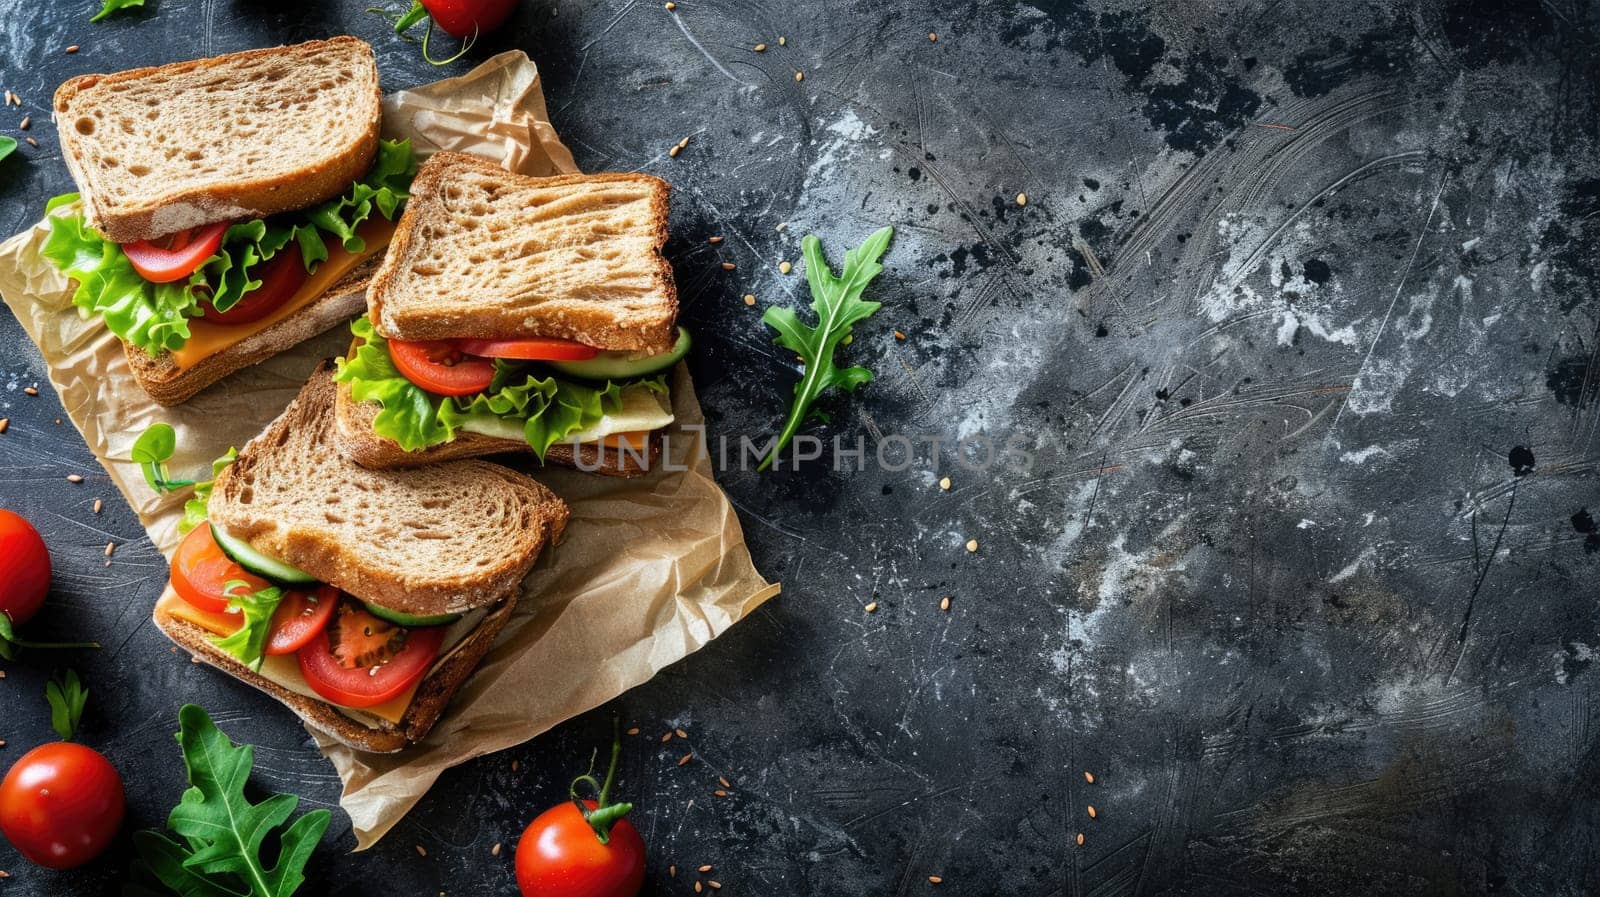 Fresh tasty sandwiches on craft paper on a dark background by natali_brill